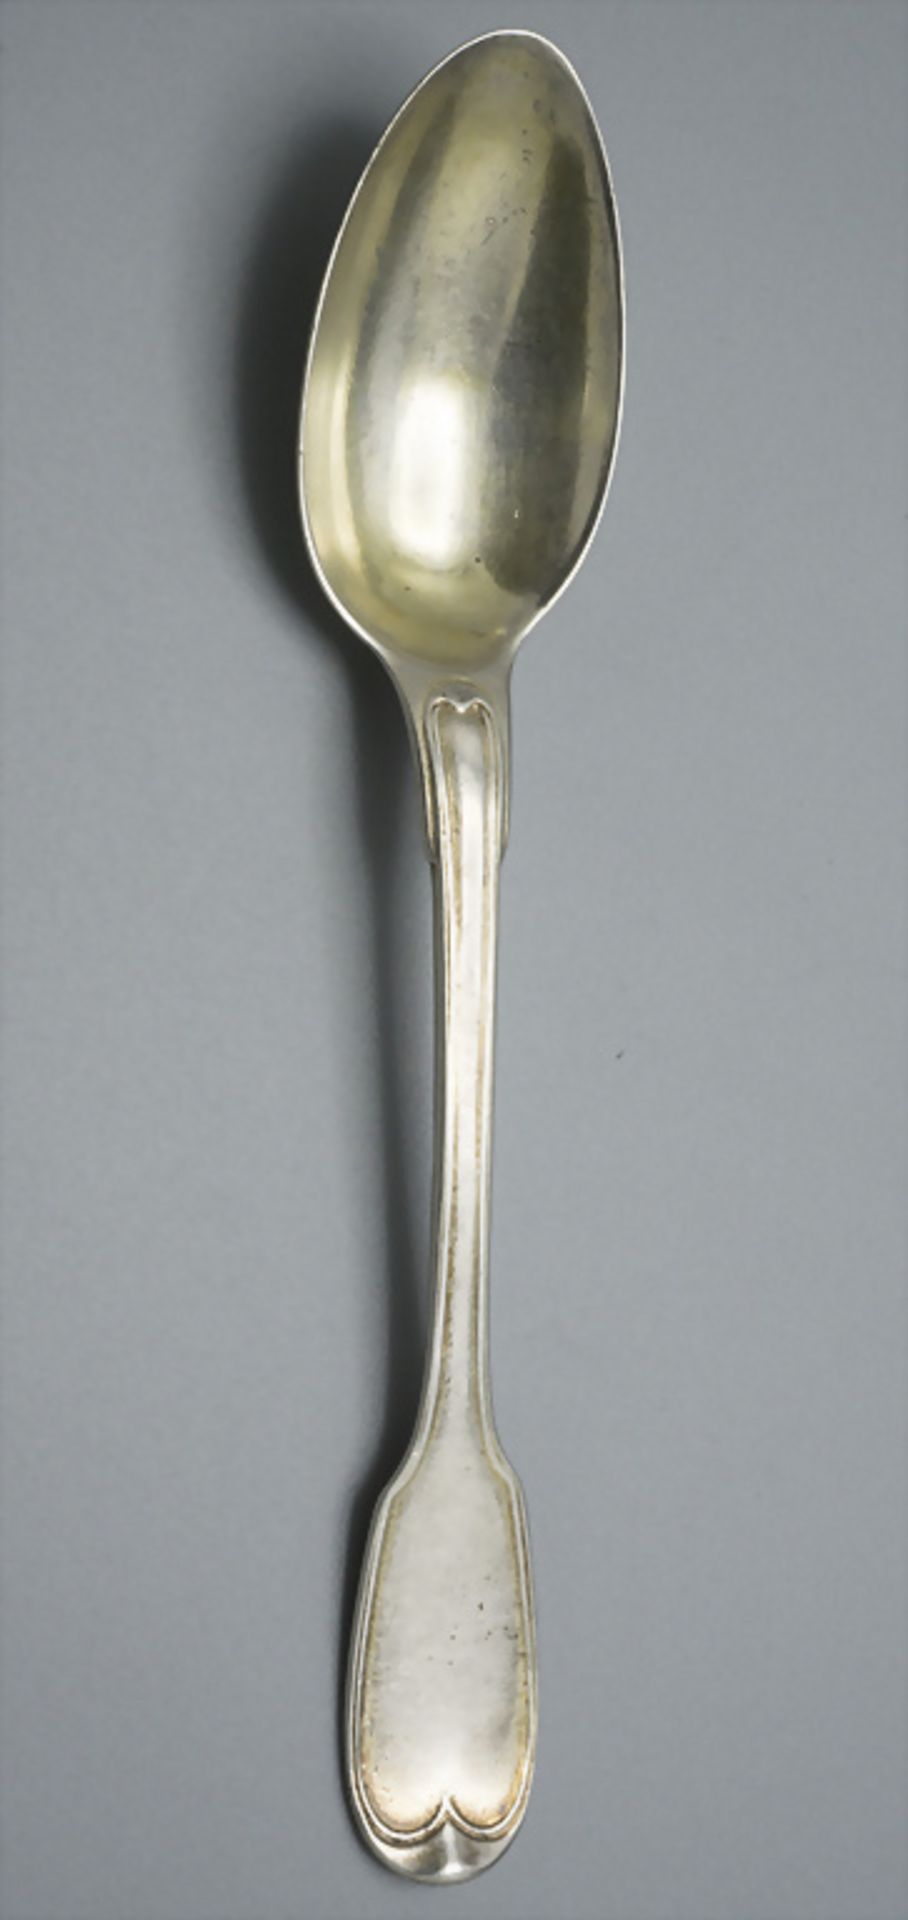 6 Löffel / 6 cuillères en argent massif / 6 silver spoons, Francois Daniel Imlin, Straßburg / ... - Bild 5 aus 5